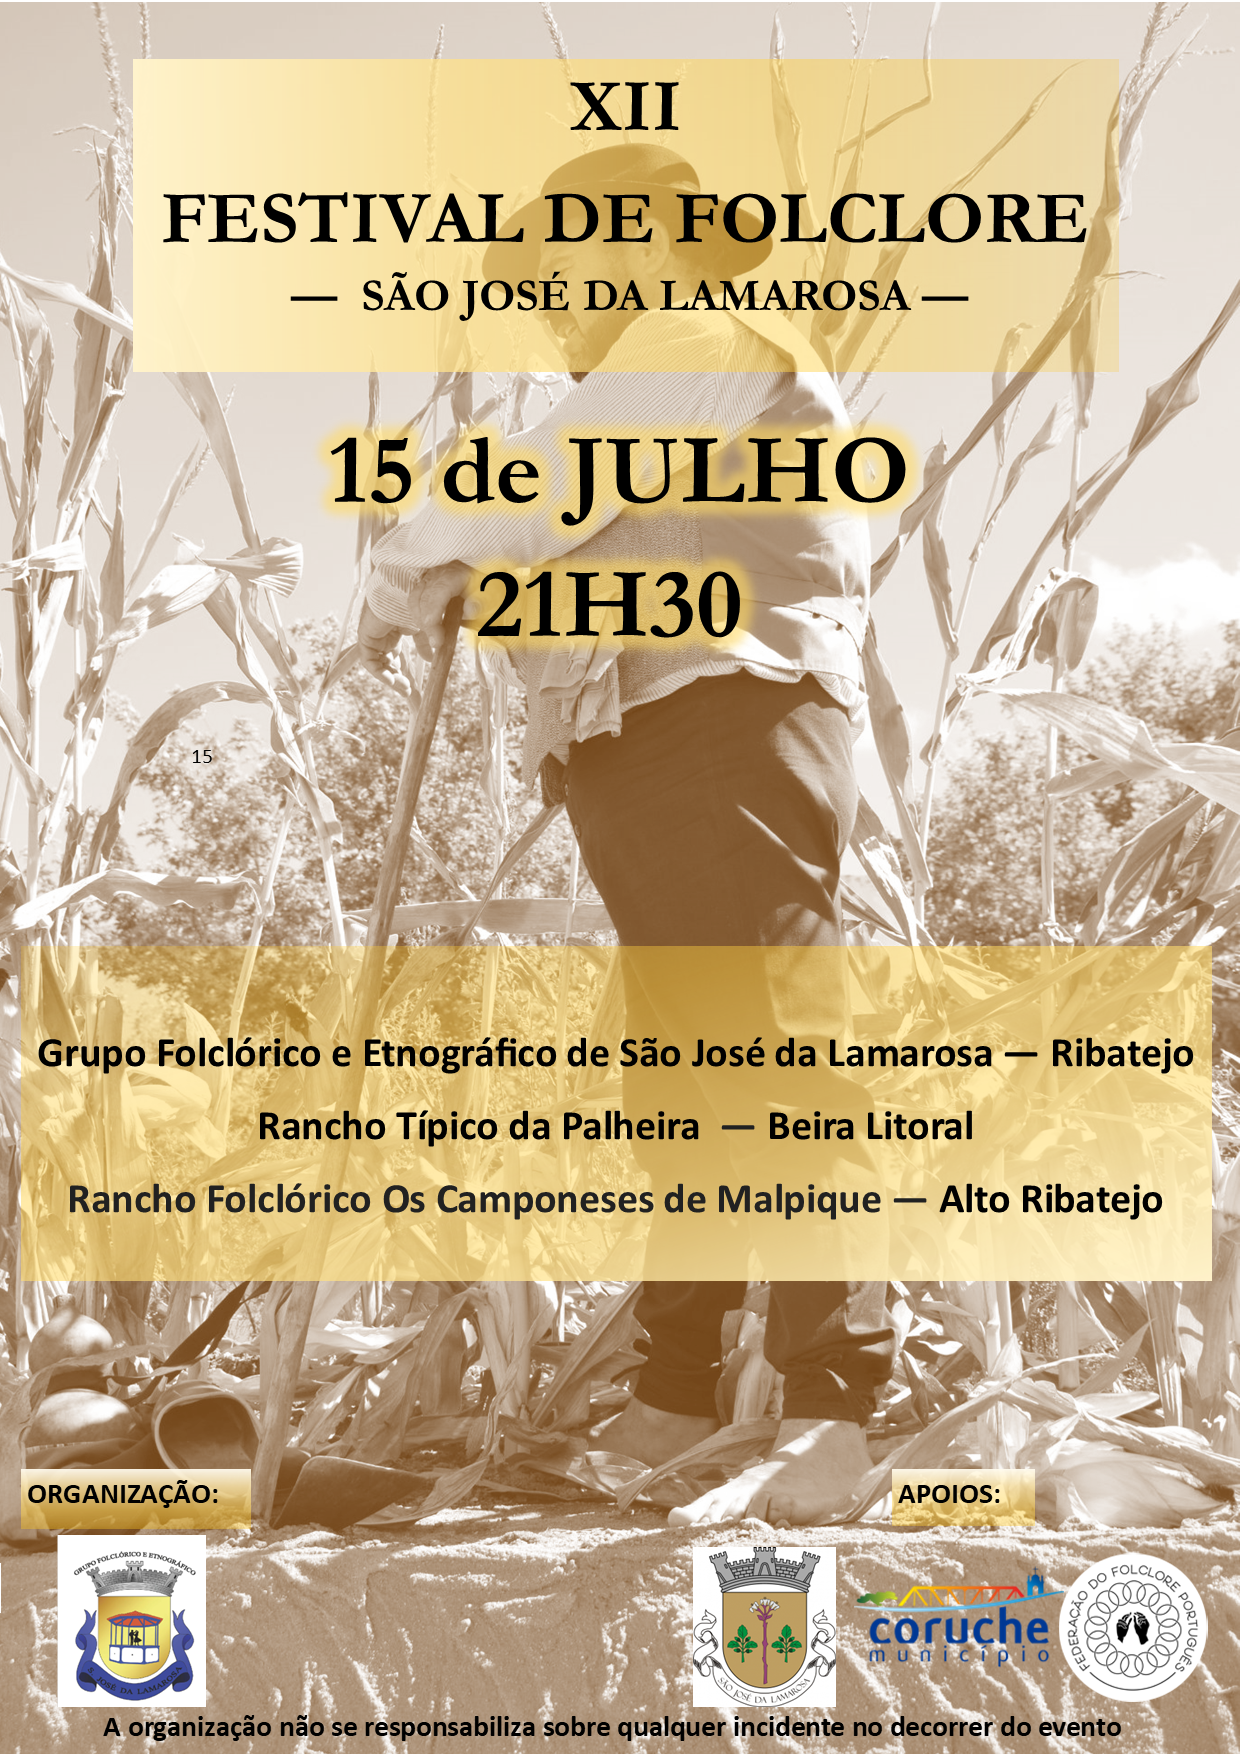 XII Festival de Folclore São José da Lamarosa